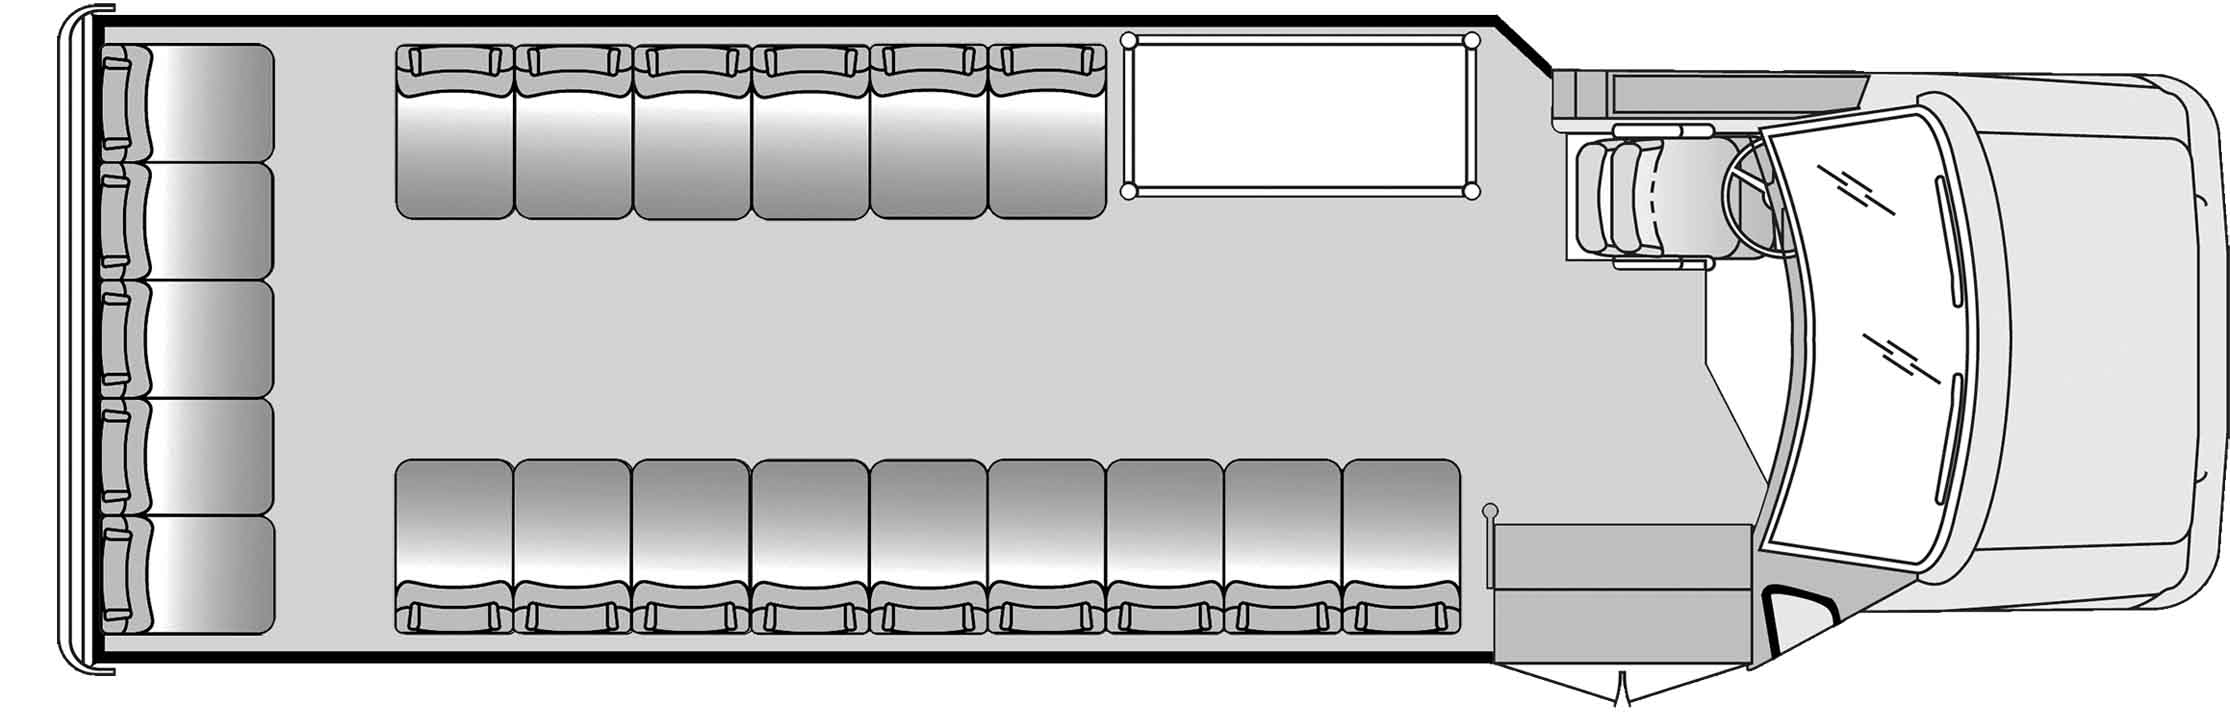 20 Passenger with Interior Luggage Plus Driver Floorplan Image